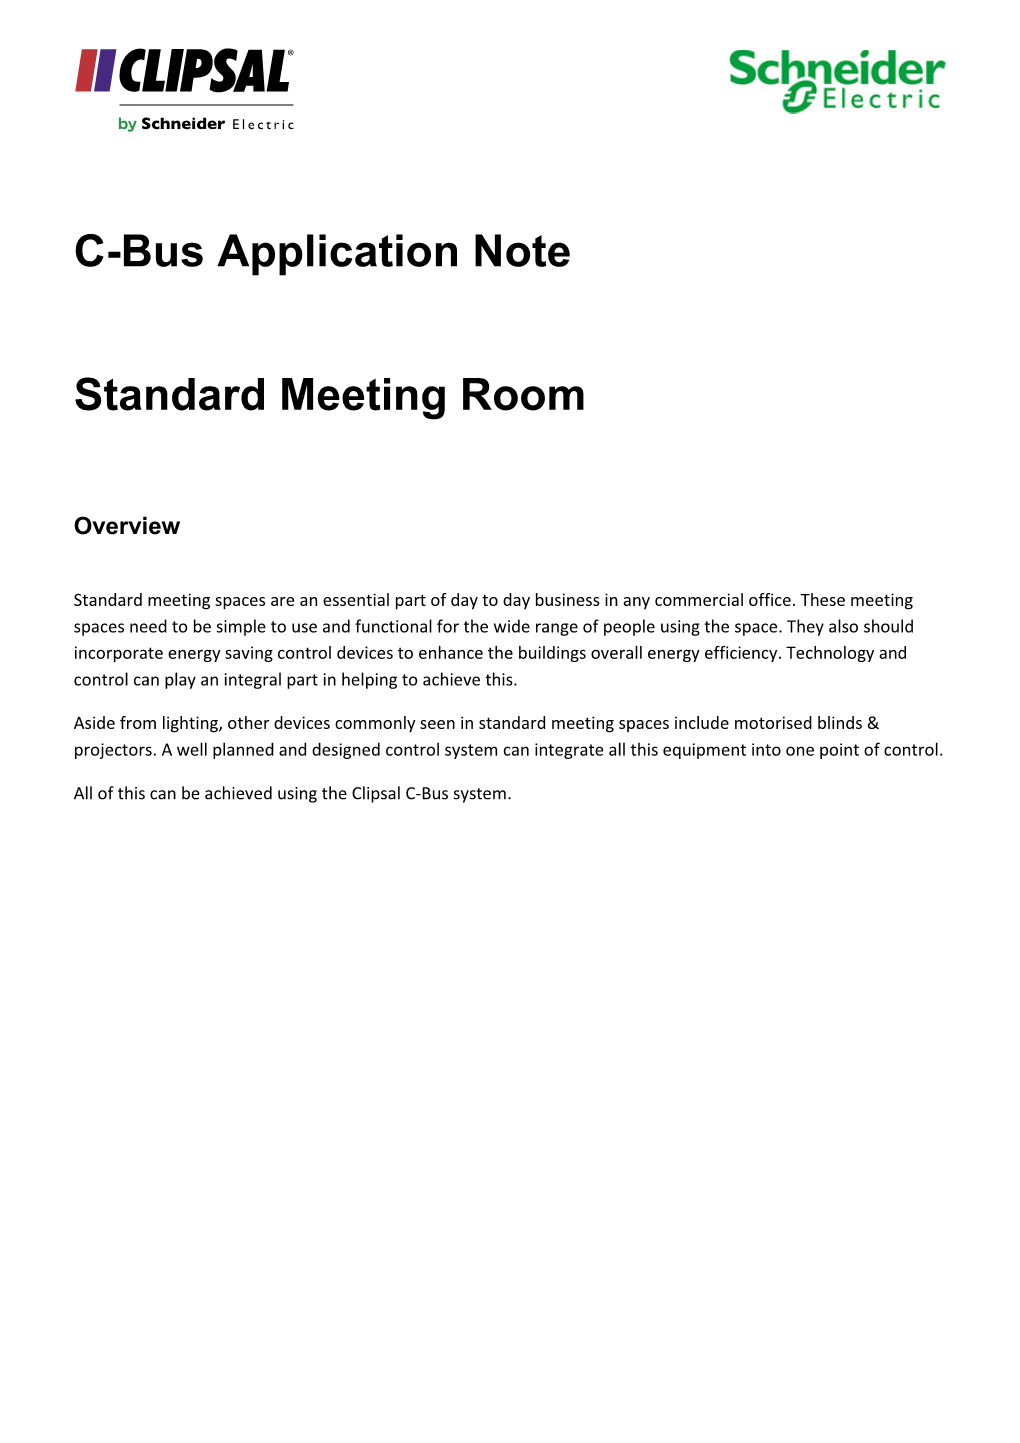 C-Bus Application Note Standard Meeting Room